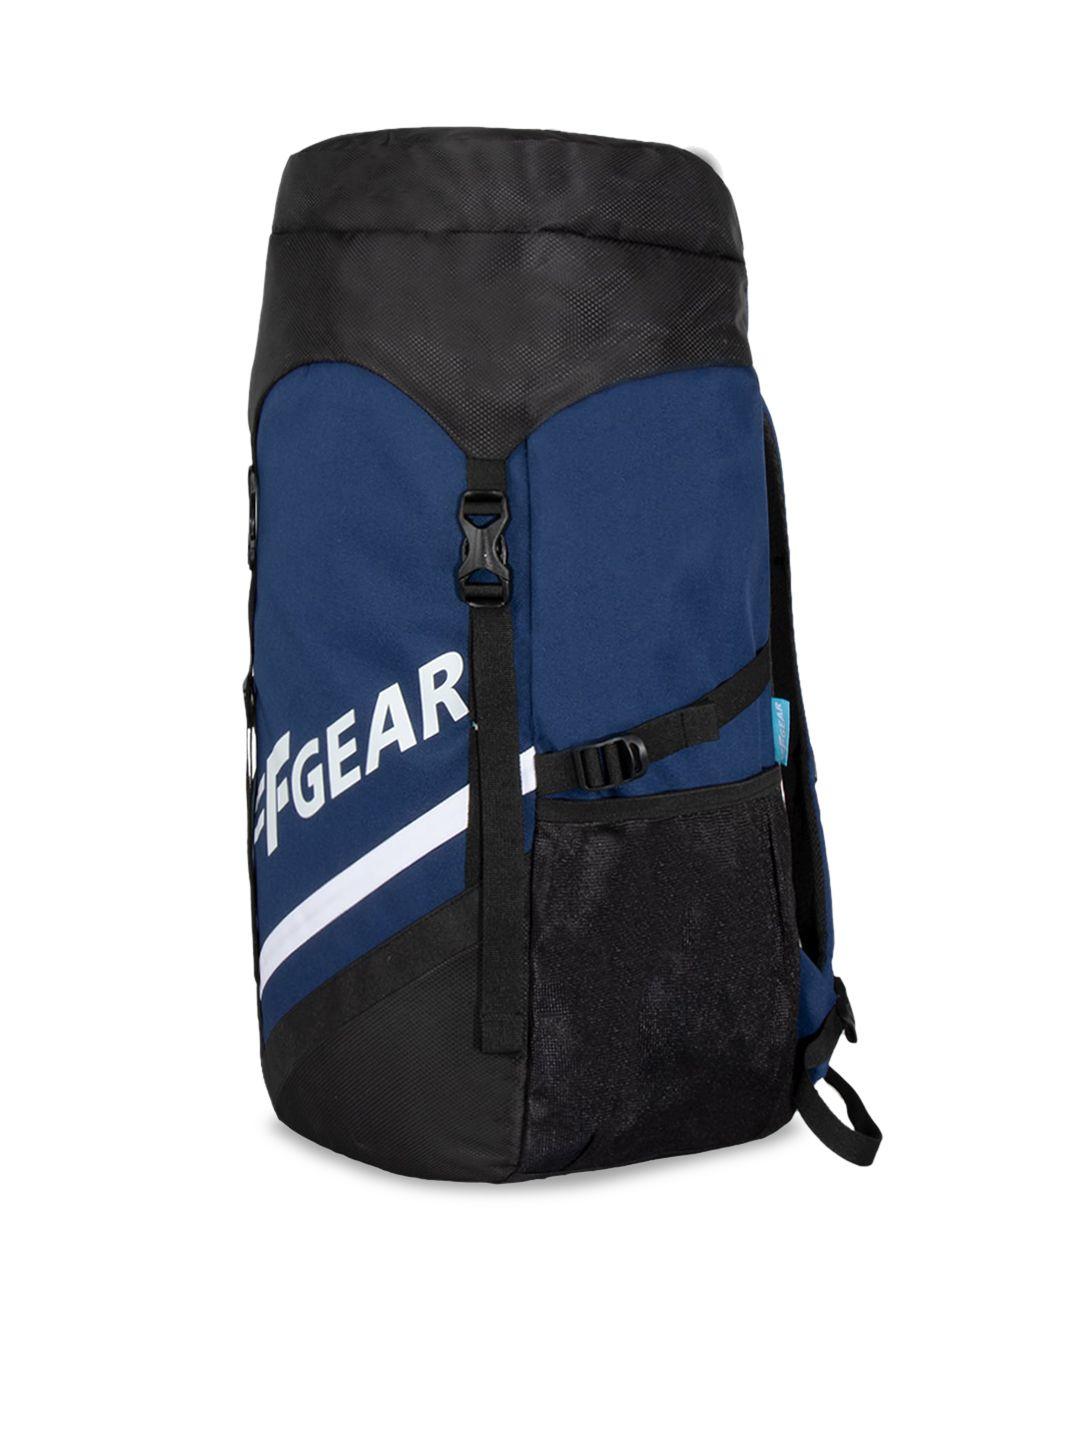 f gear blue & black printed rucksacks